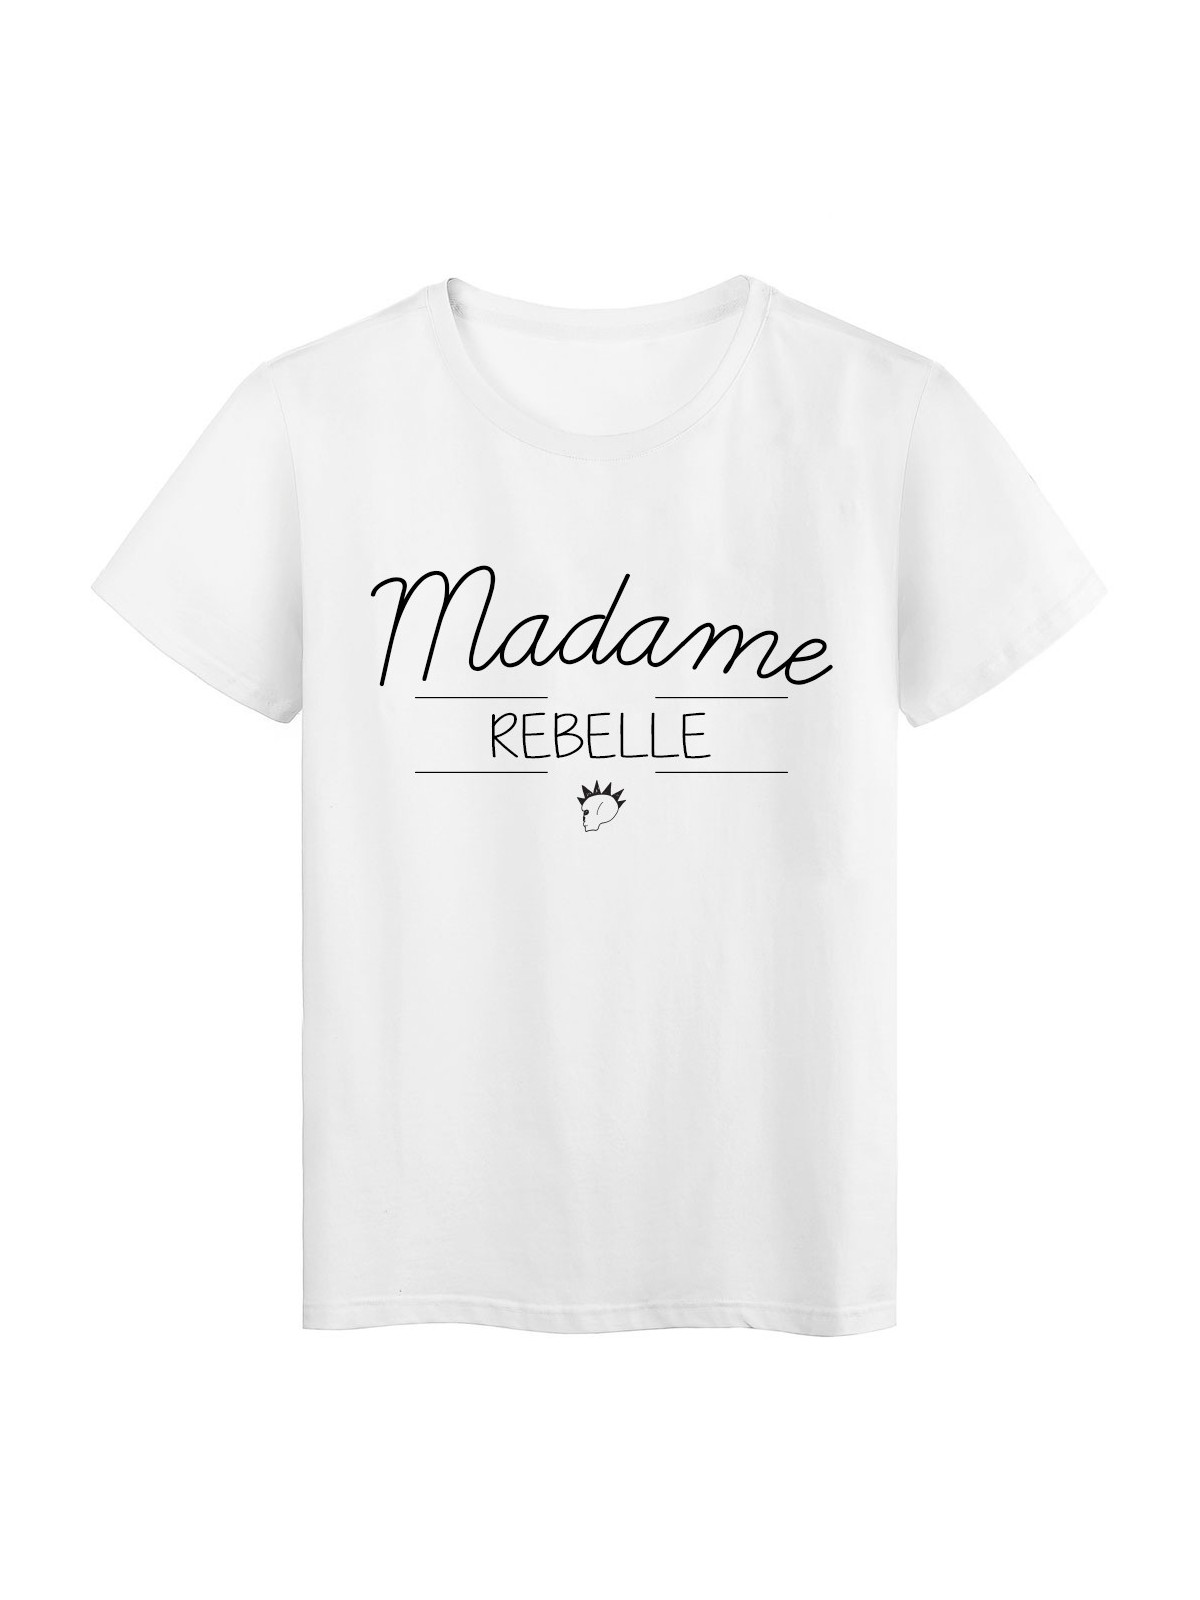 T-Shirt imprimÃ© humour design Madame Rebelle rÃ©f 2205